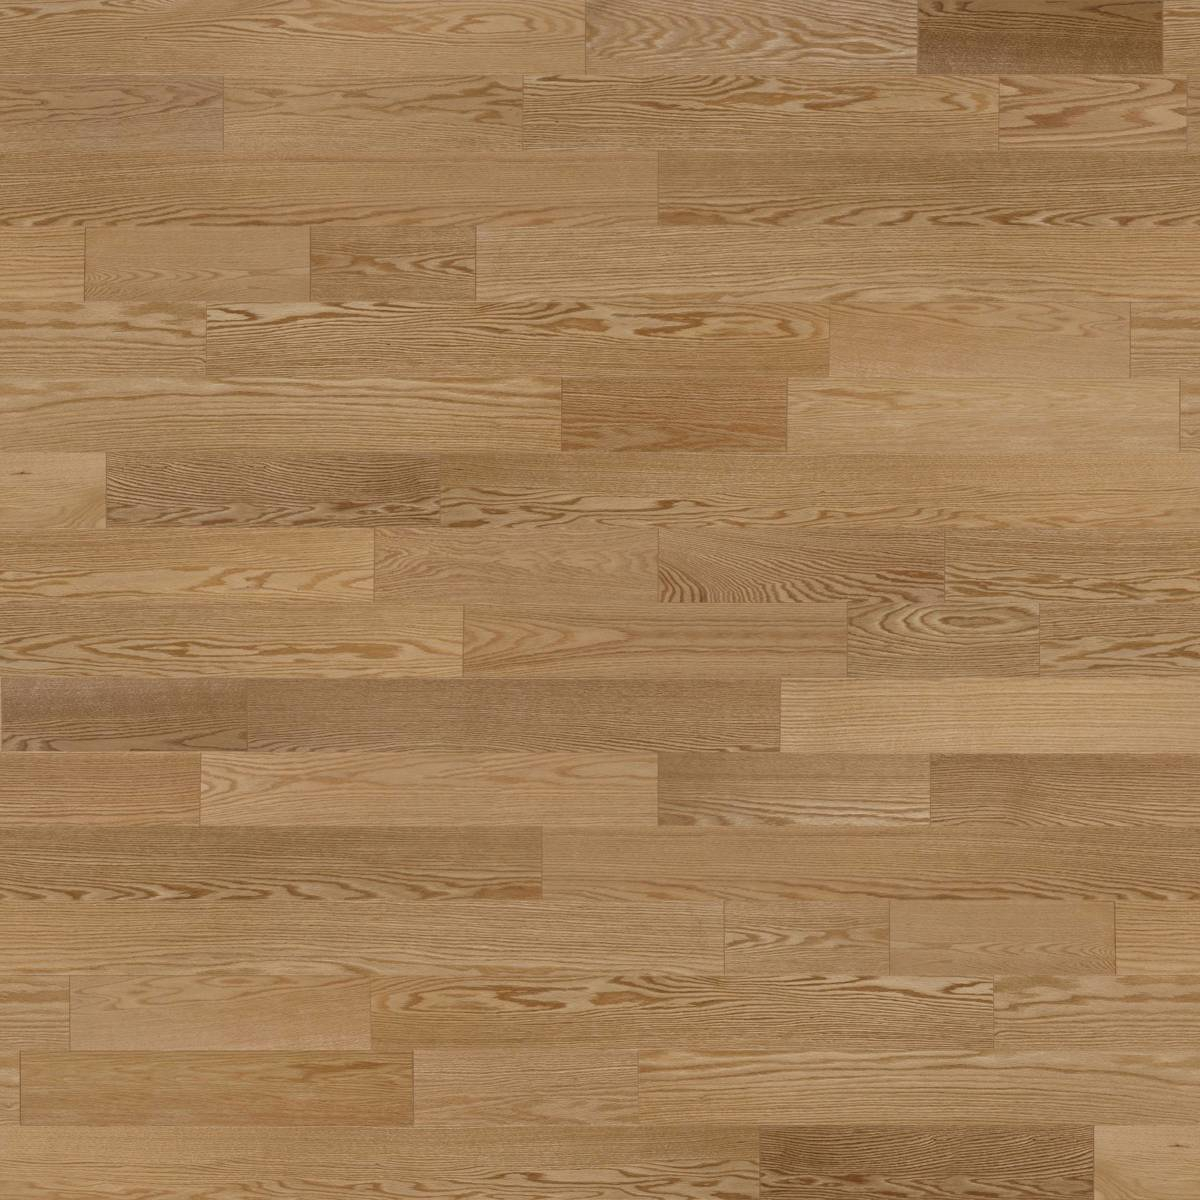 Red Oak Solid Hardwood Flooring 3 1 4, Red Oak Natural Solid Hardwood Flooring